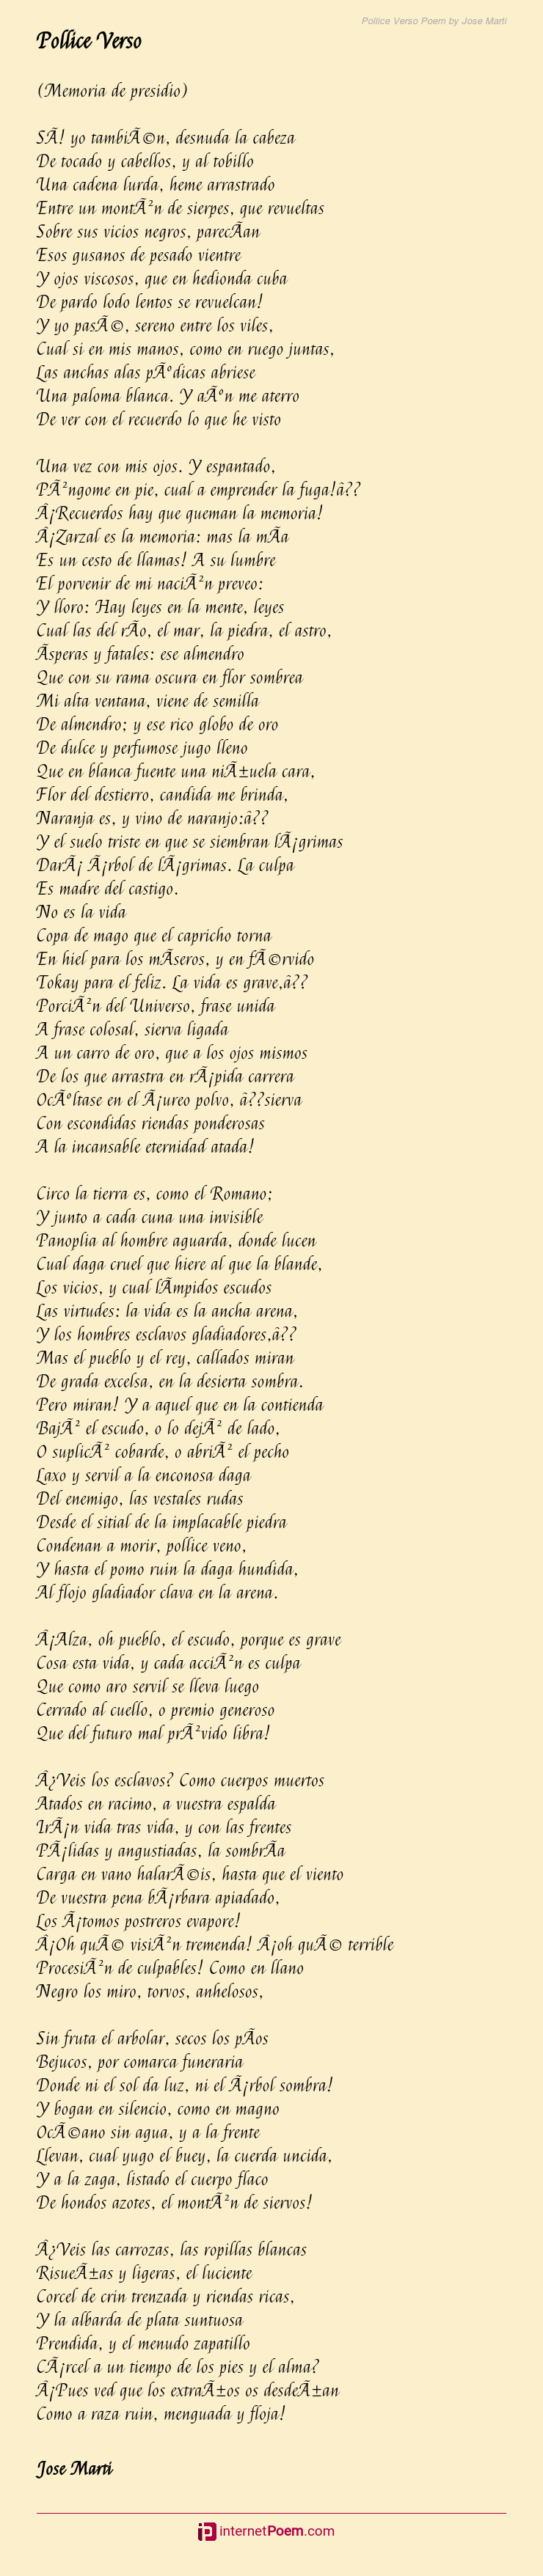 Pollice Verso Poem By Jose Marti